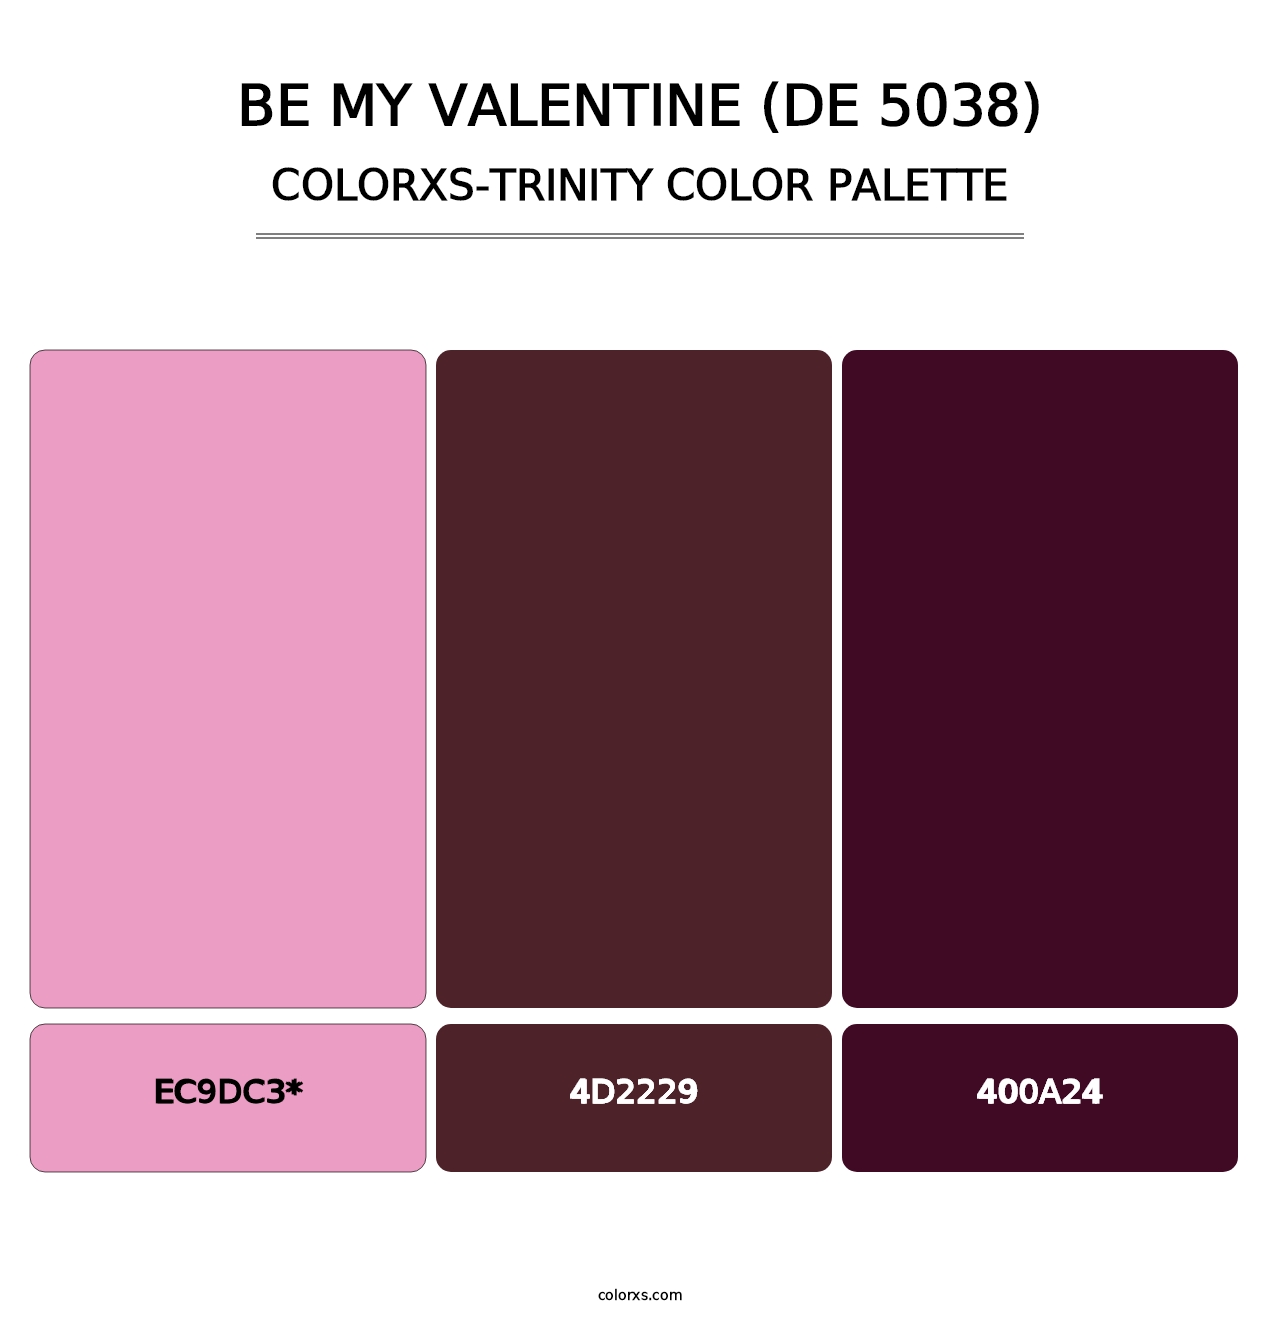 Be My Valentine (DE 5038) - Colorxs Trinity Palette